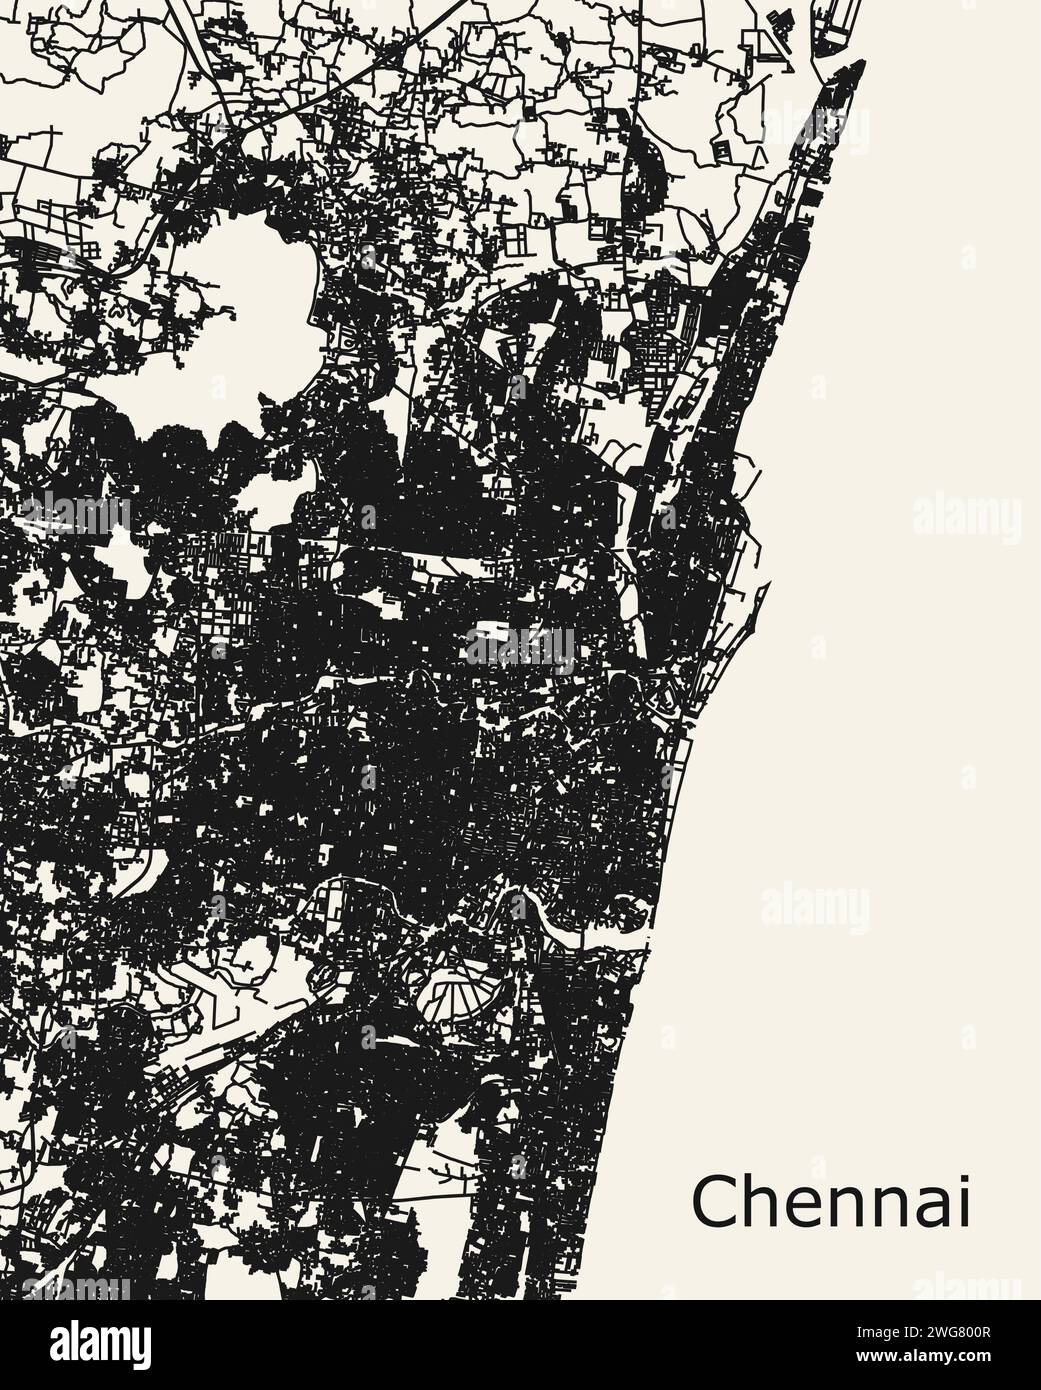 City road map of Chennai, Tamil Nadu, India Stock Vector